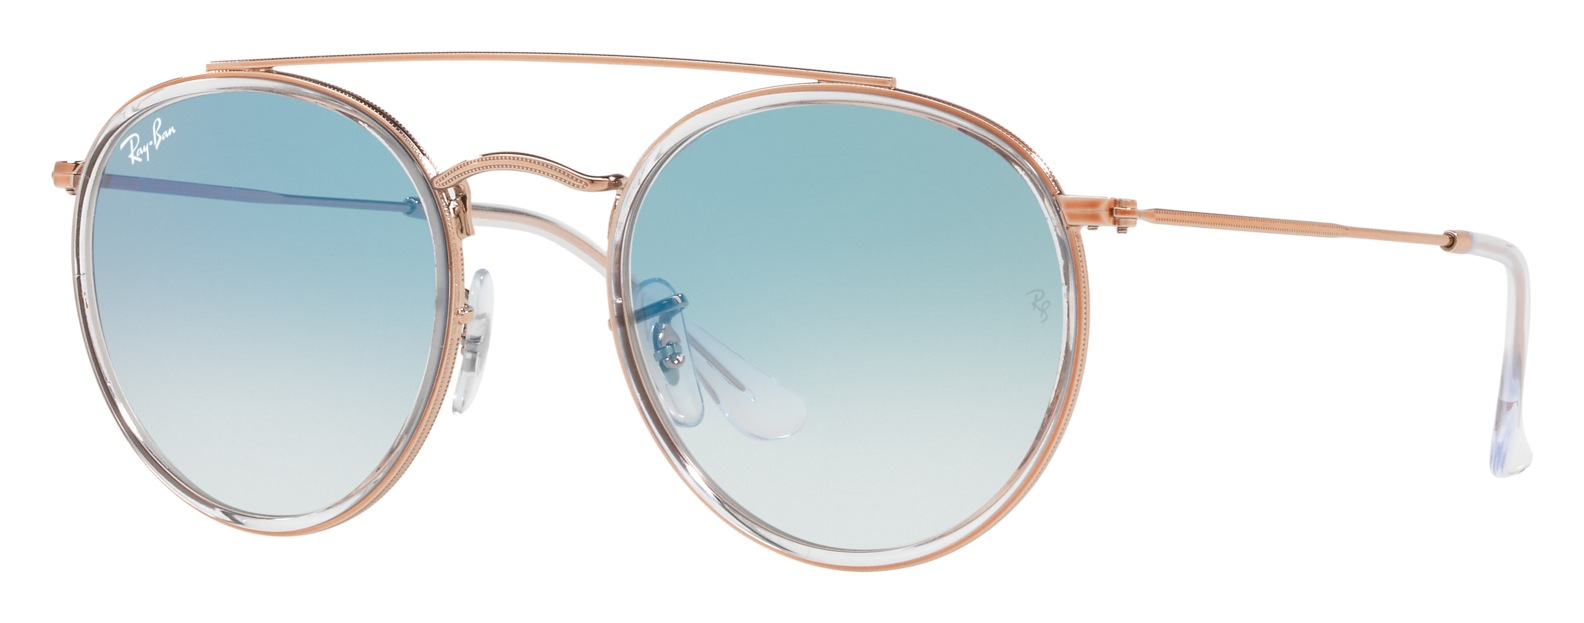 Ray-Ban Round Double-Bridge RB3647 Glass Sunglasses - Gold/Silver Gradient Flash Mirror - Standard